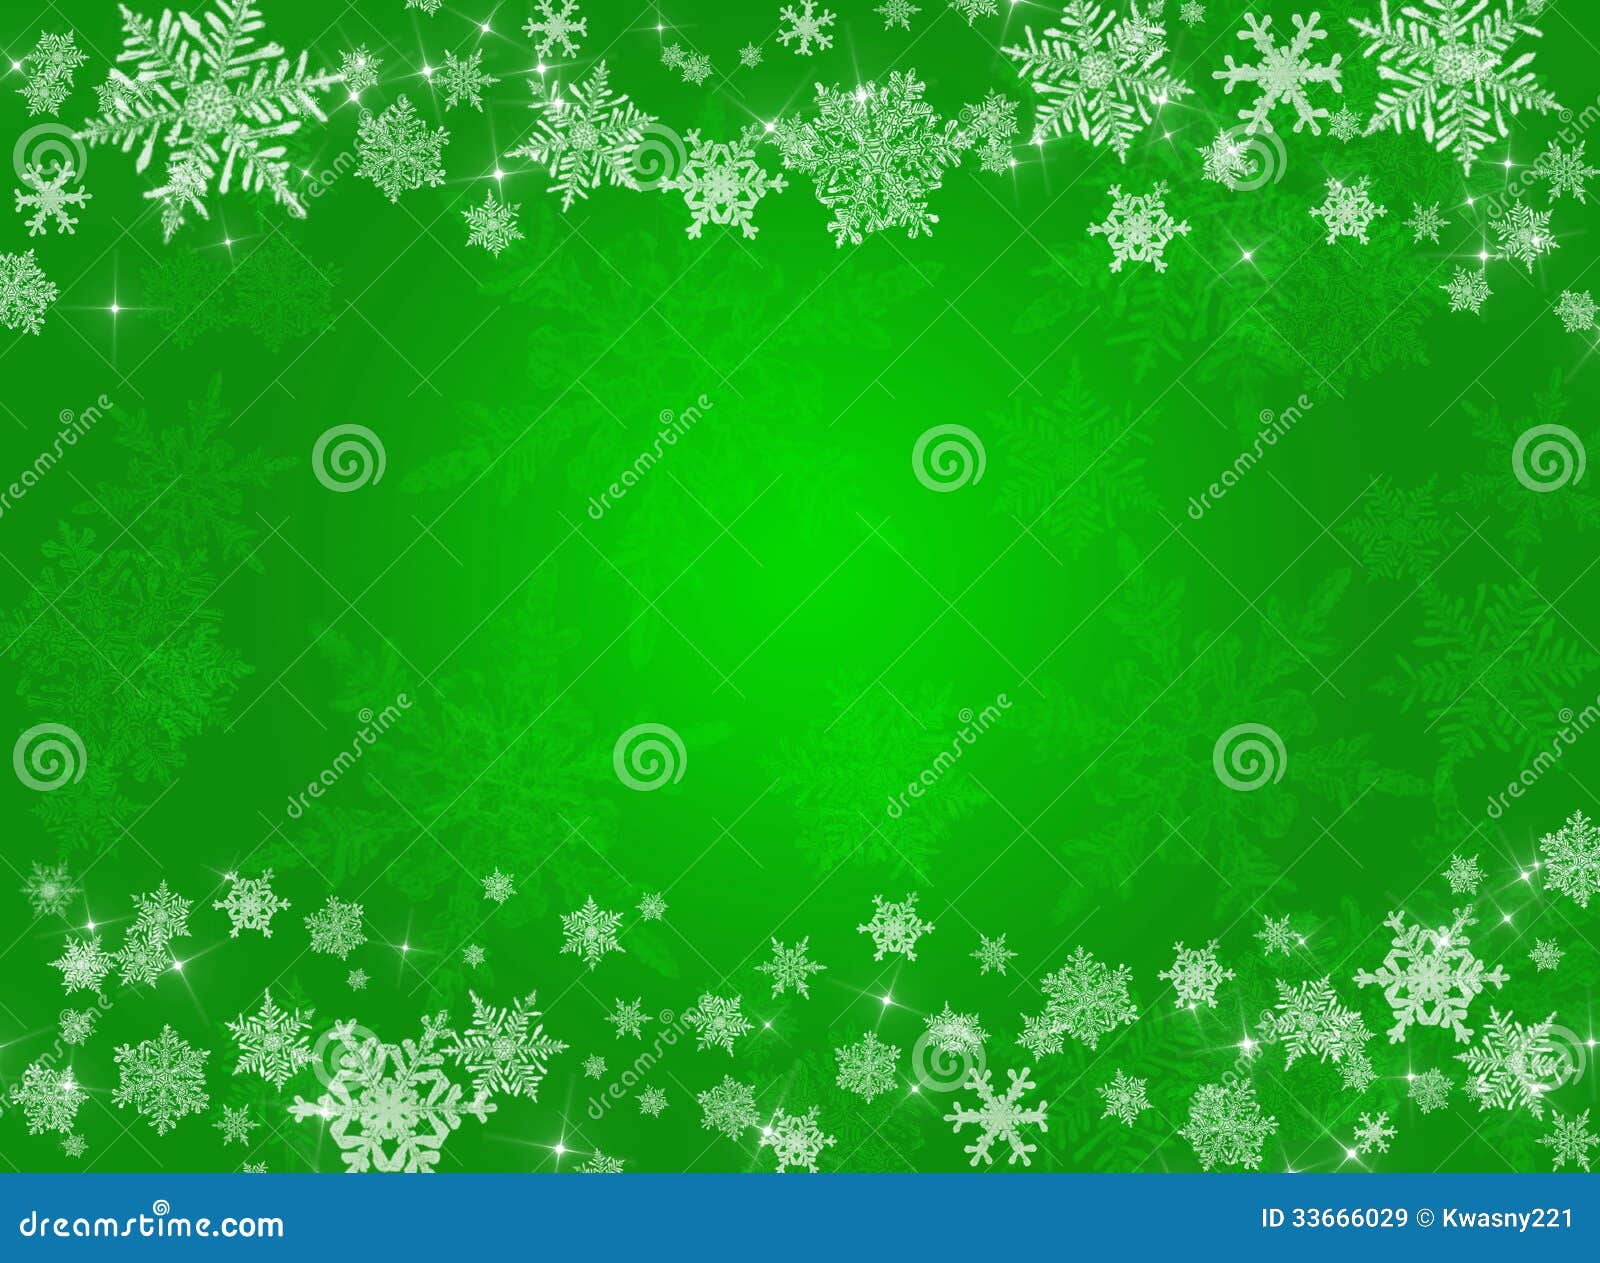 Christmas Background Royalty Free Stock Images - Image 